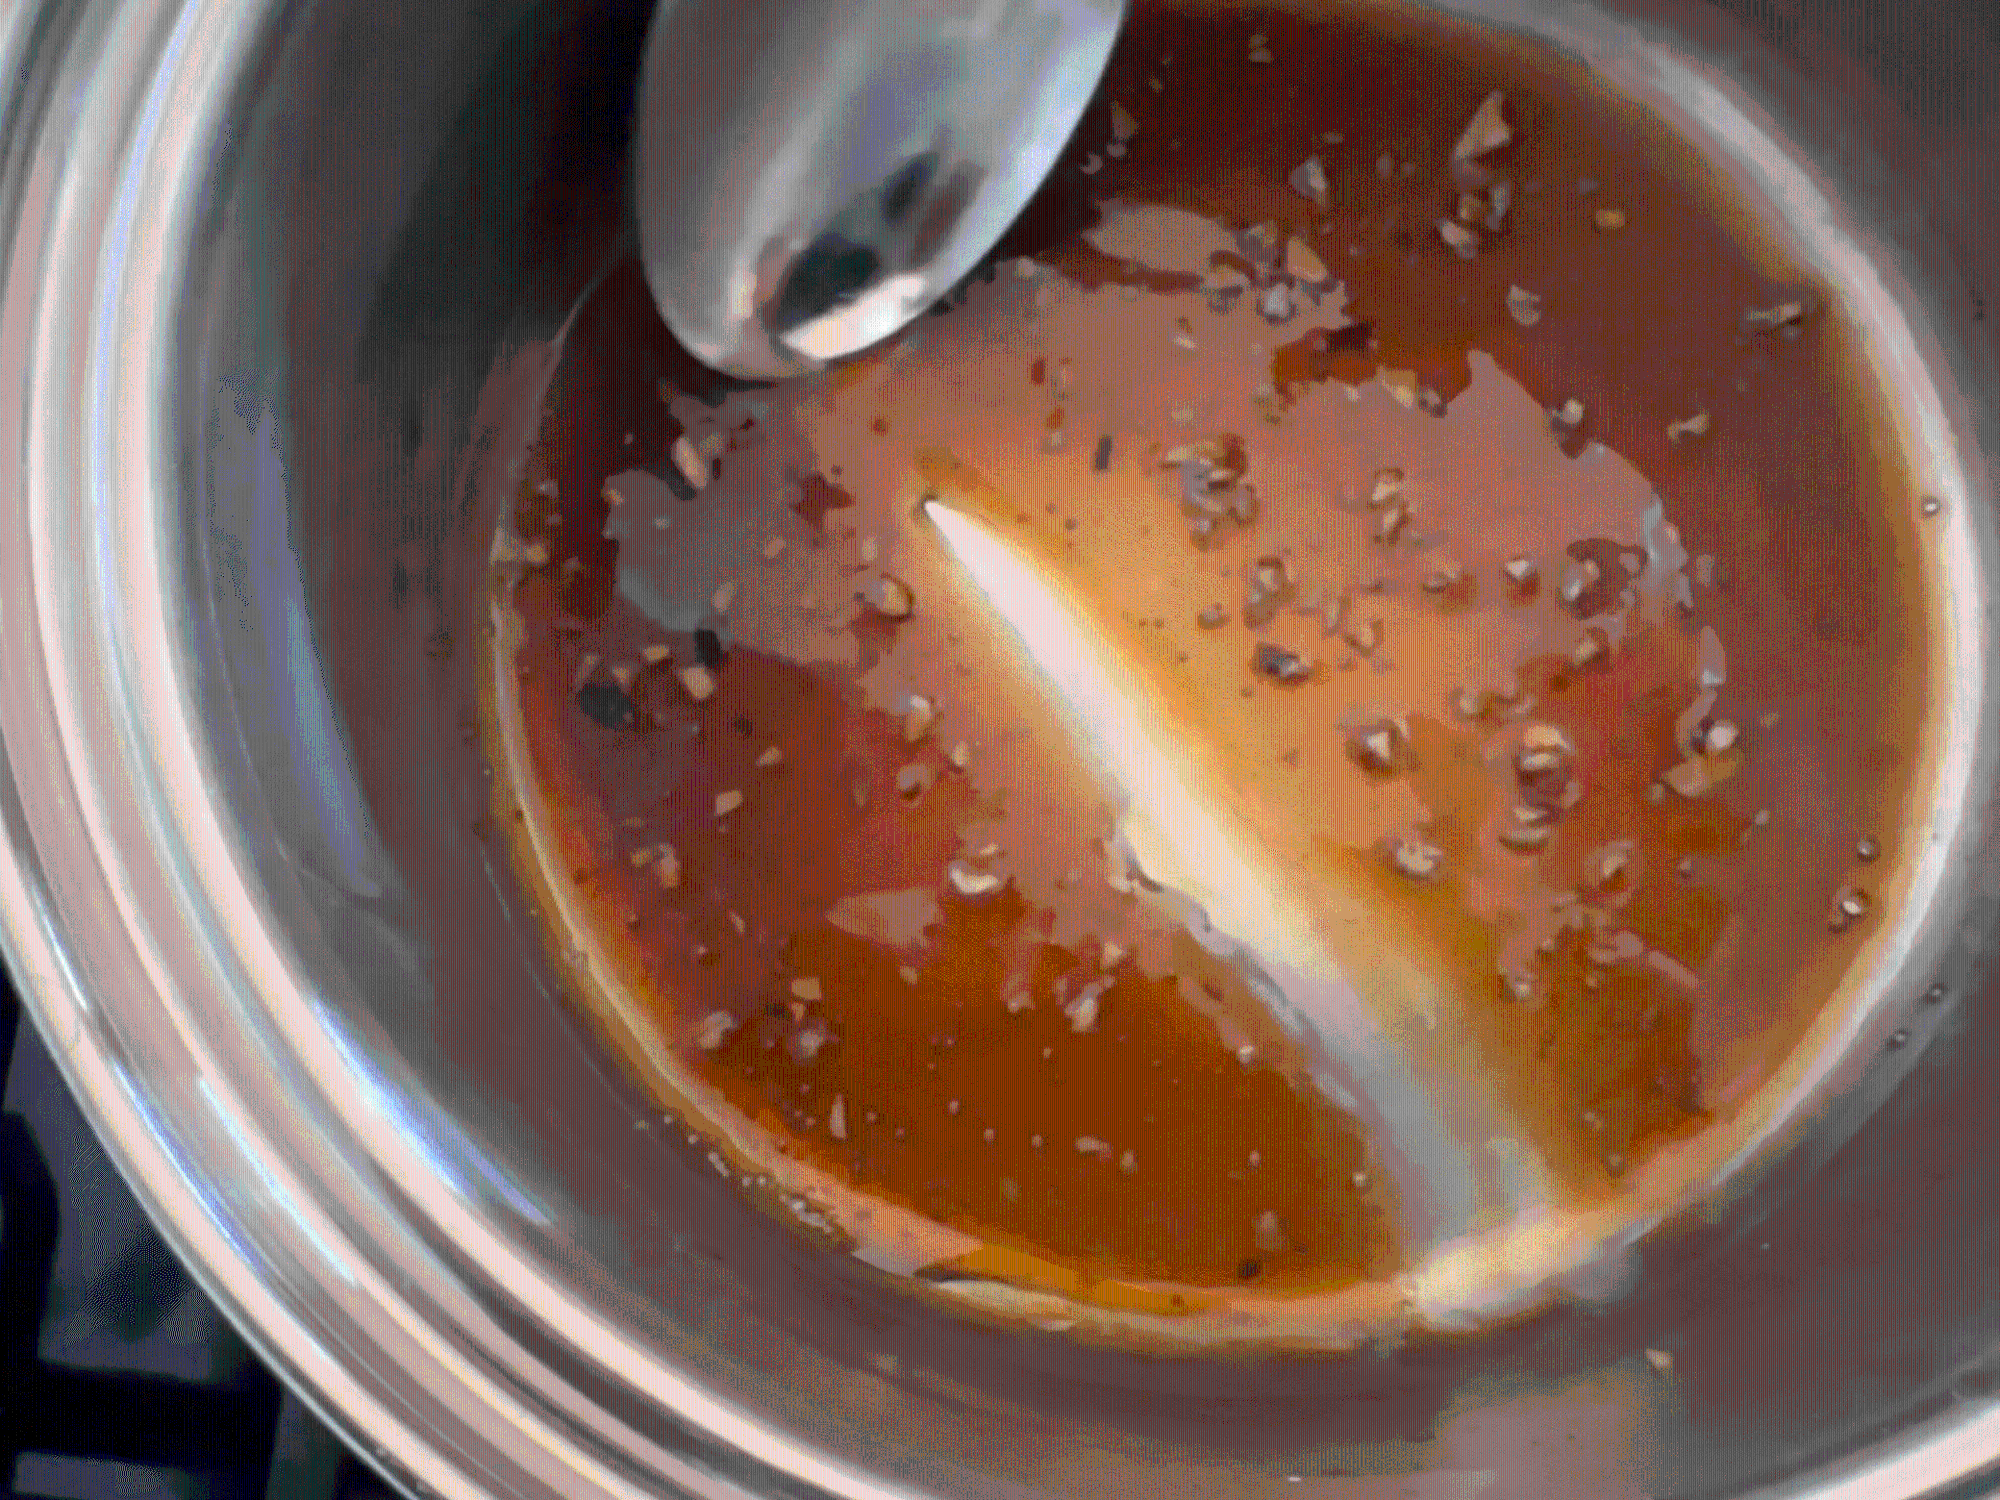 Running a spoon through the sauce.